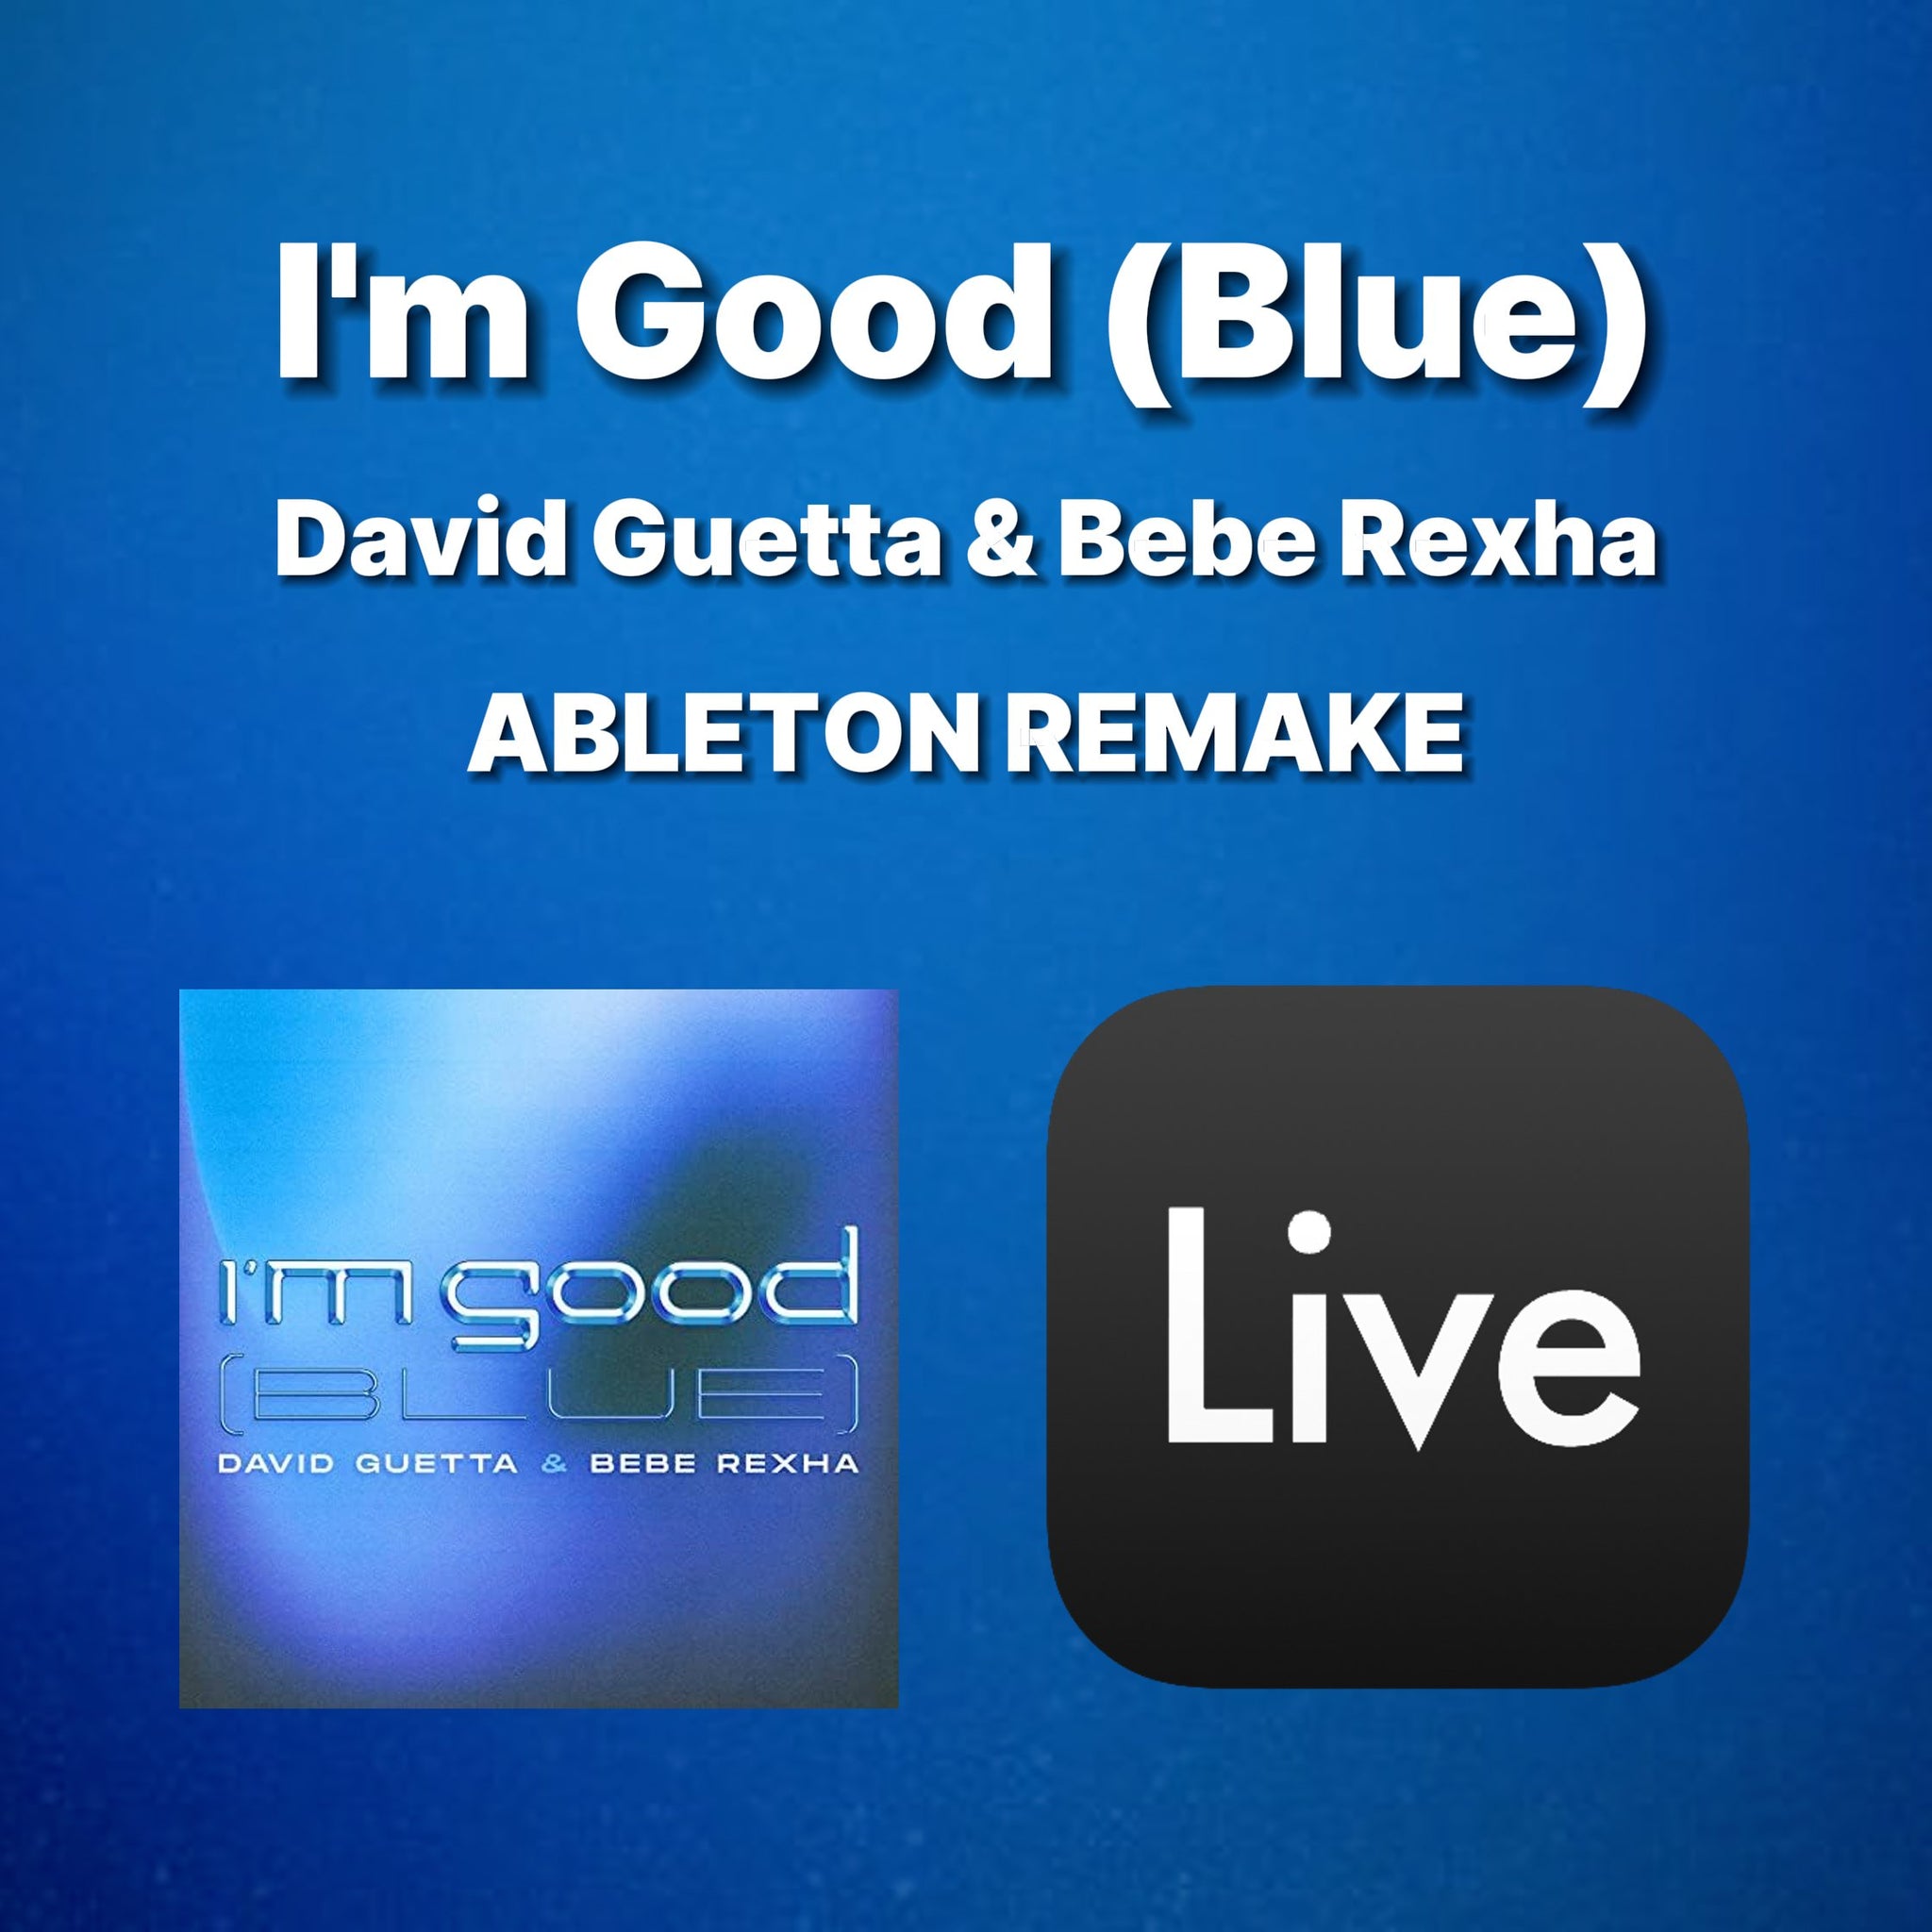 David Guetta & Bebe Rexha - I'm Good (Blue) [Ableton Remake] - CR Music - Tunebat Marketplace